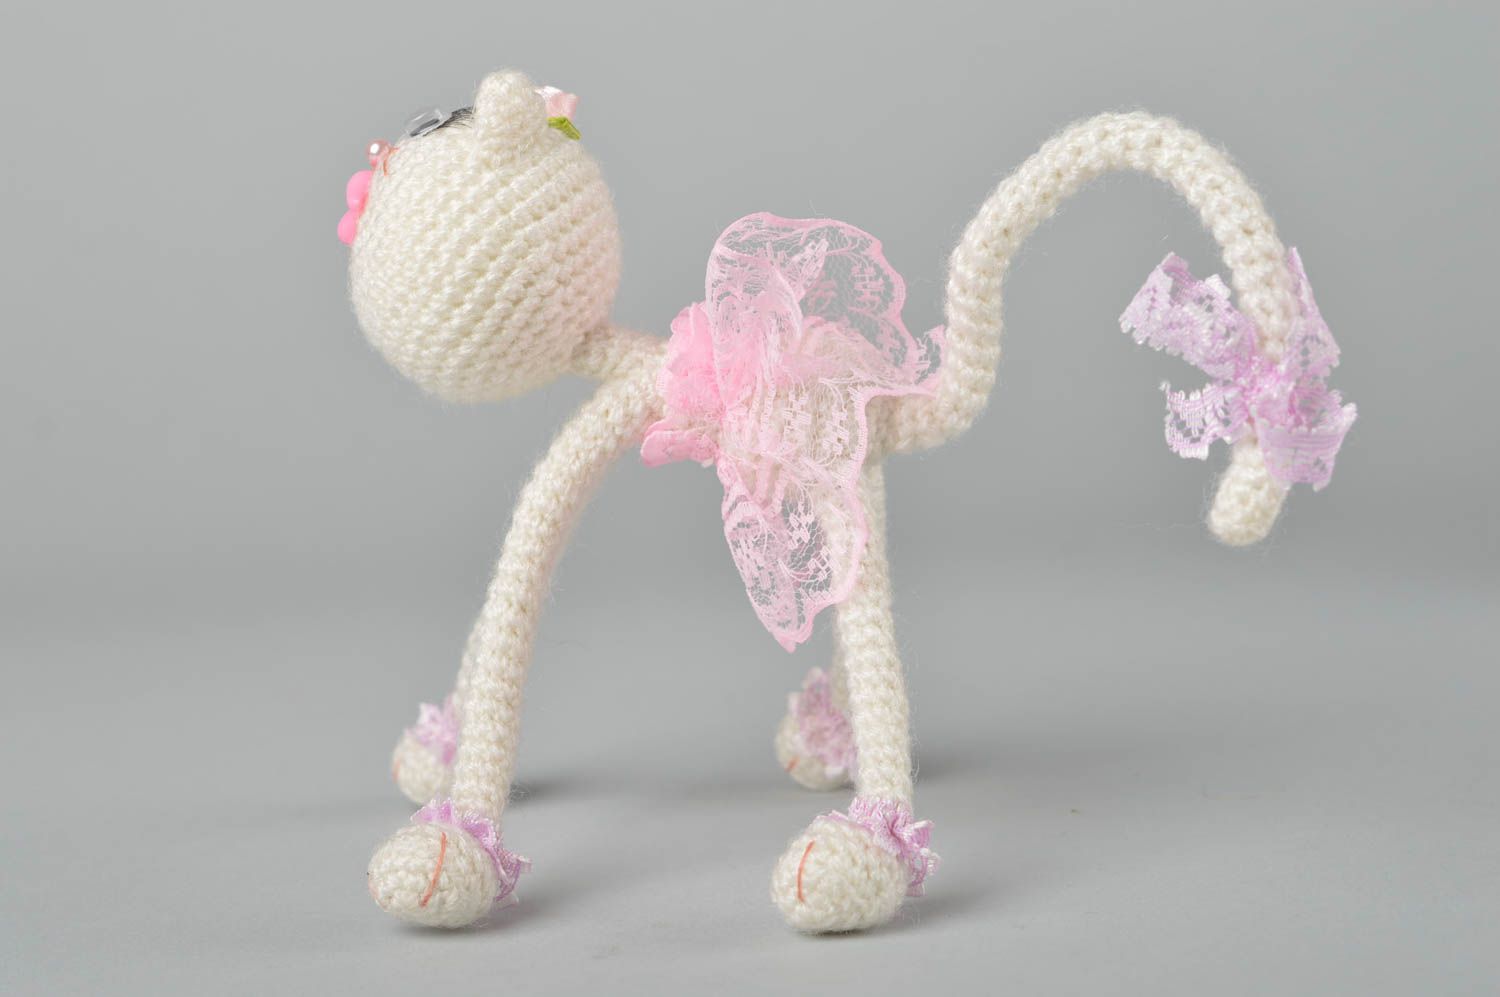 Hand-crocheted creative toy handmade designer toy for babies nursery decor photo 3